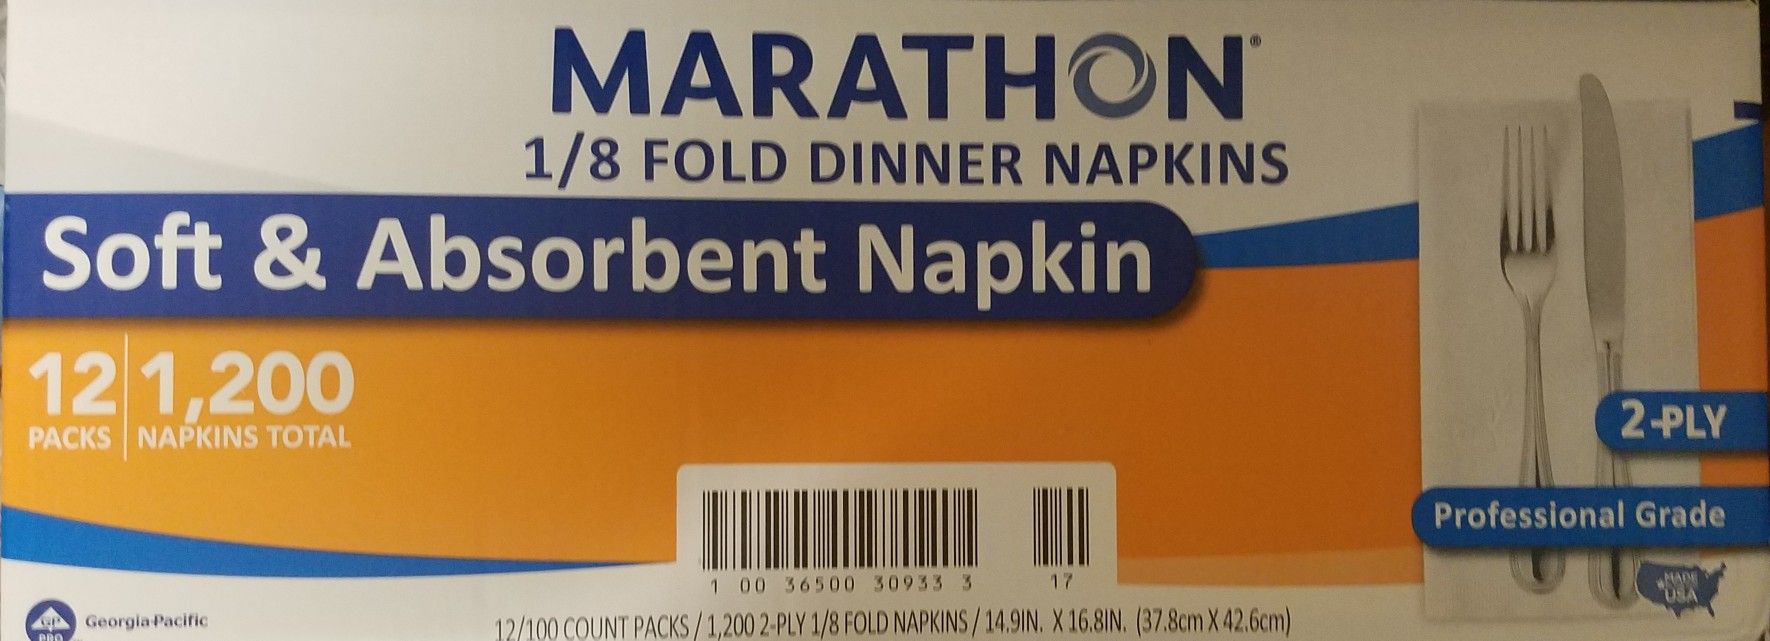 CASE OF MARATHON DINNER NAPKINS